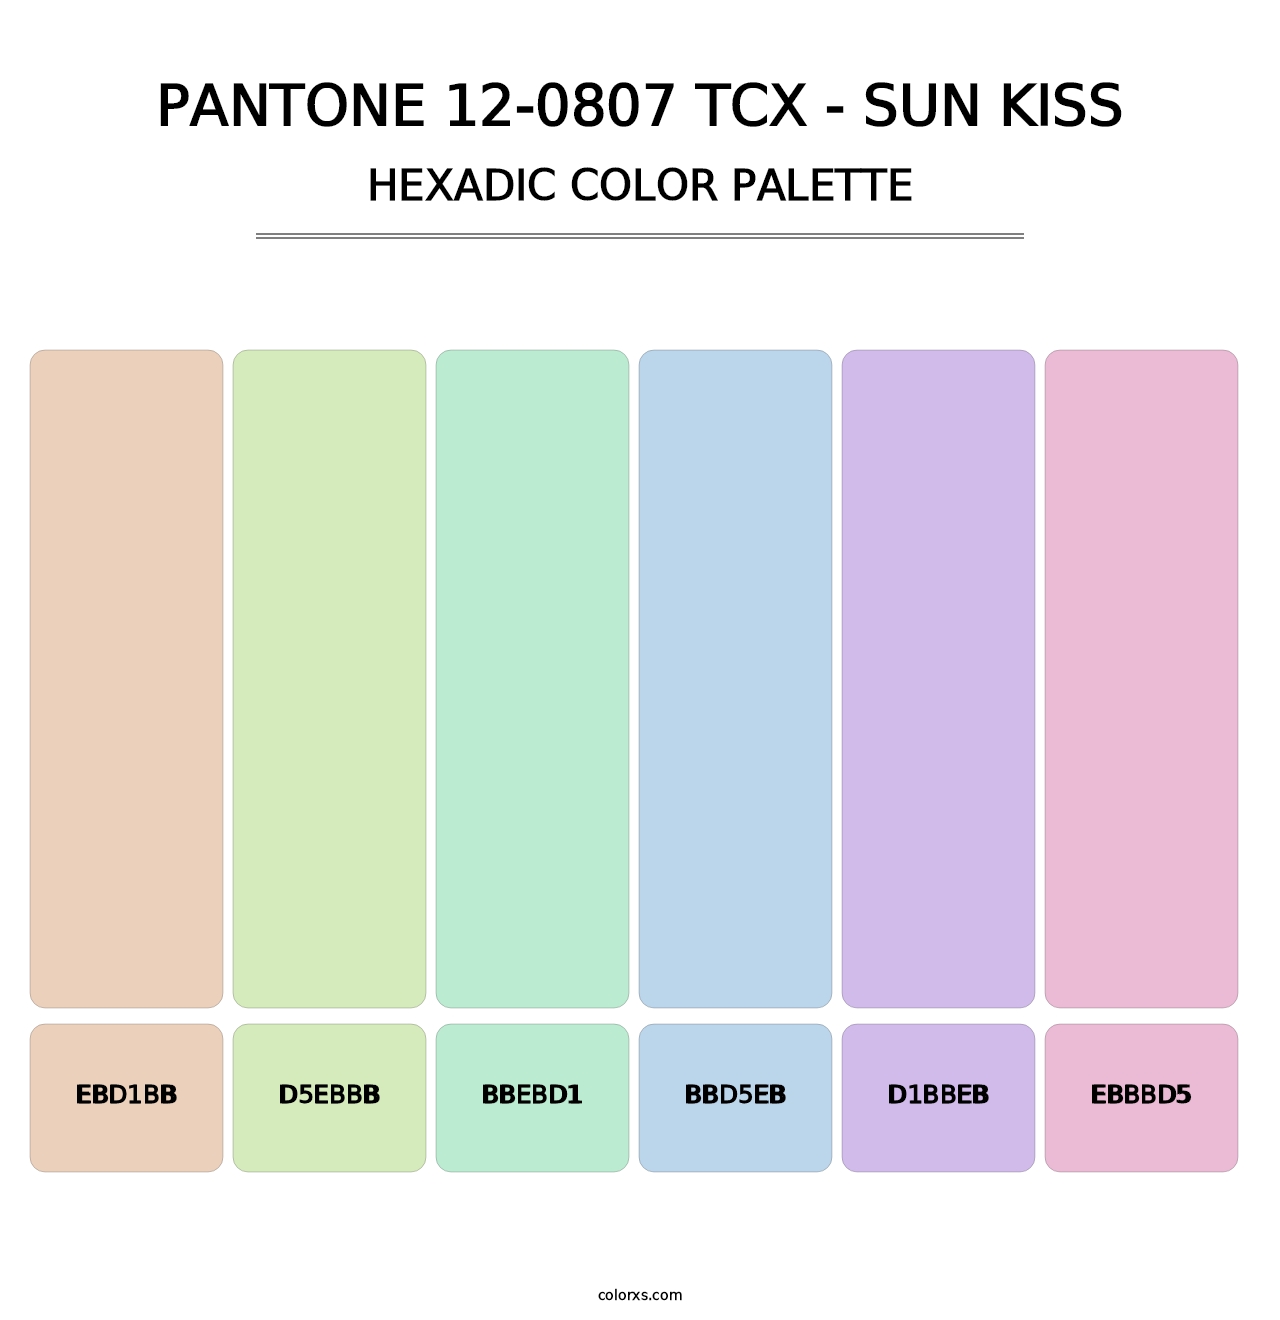 PANTONE 12-0807 TCX - Sun Kiss - Hexadic Color Palette